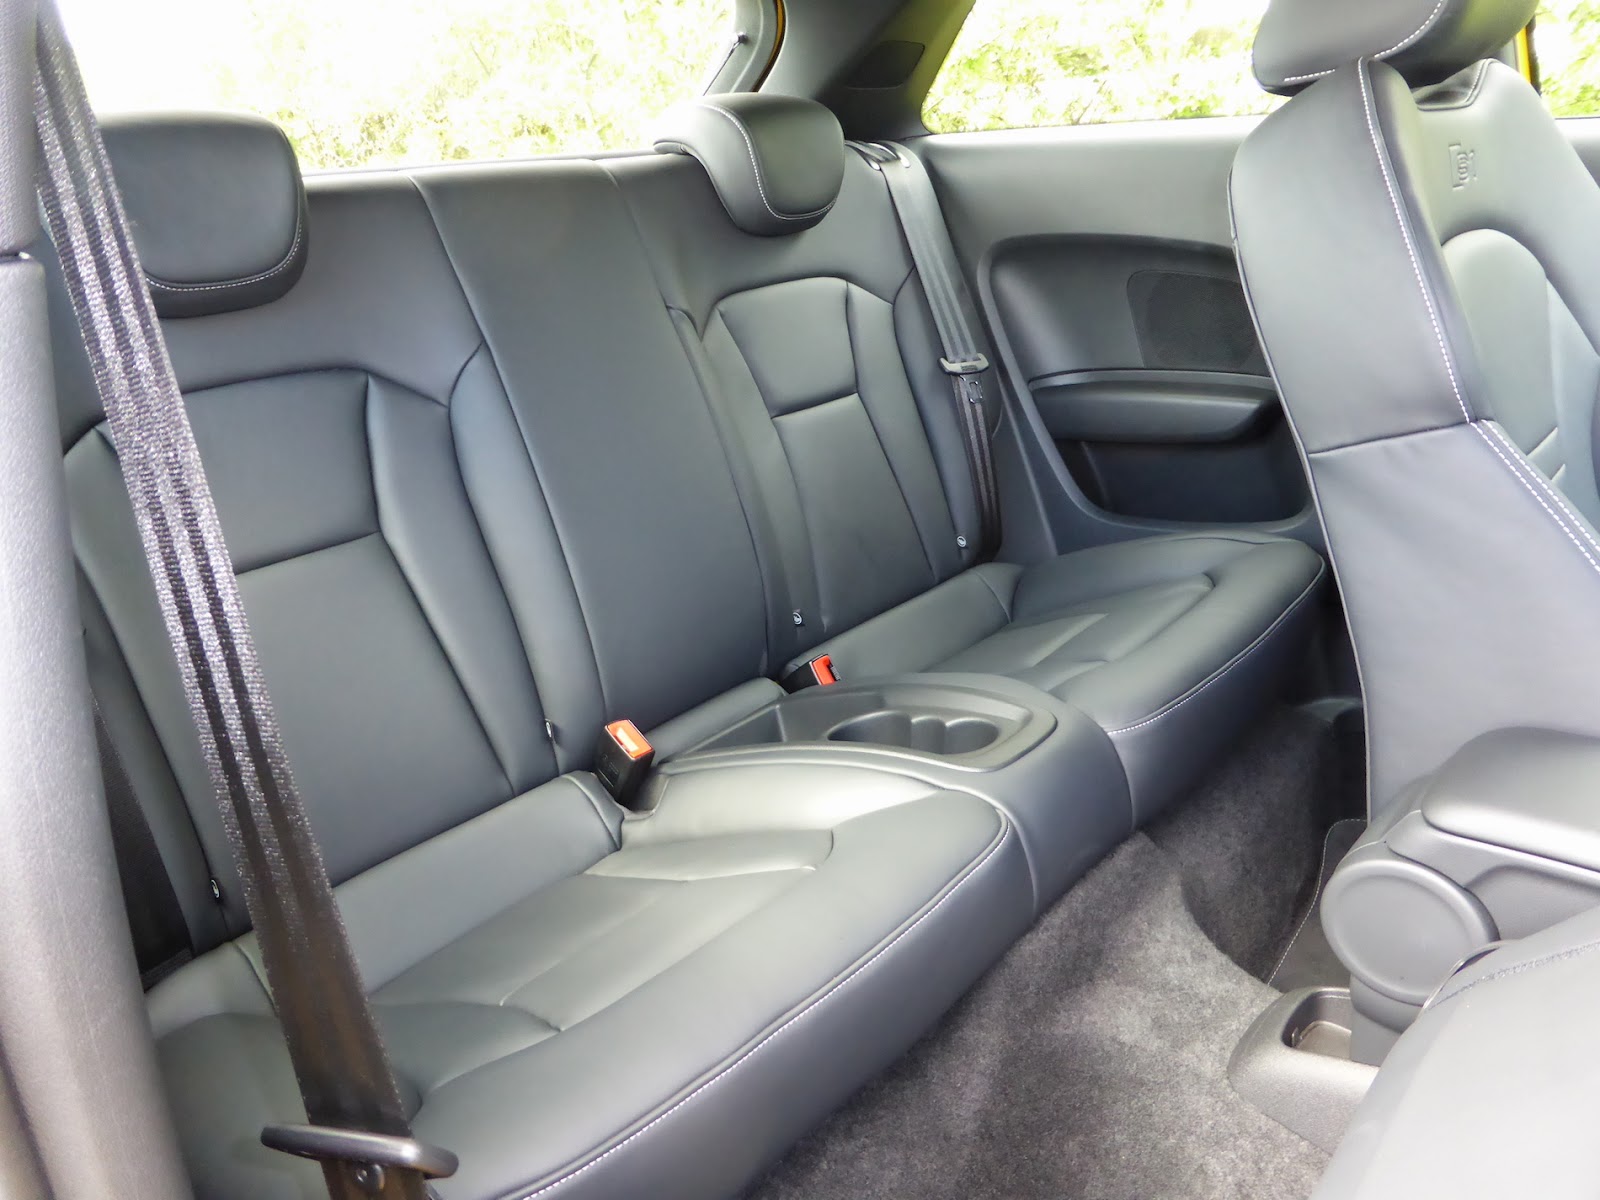 2014 Audi S1 rear seats